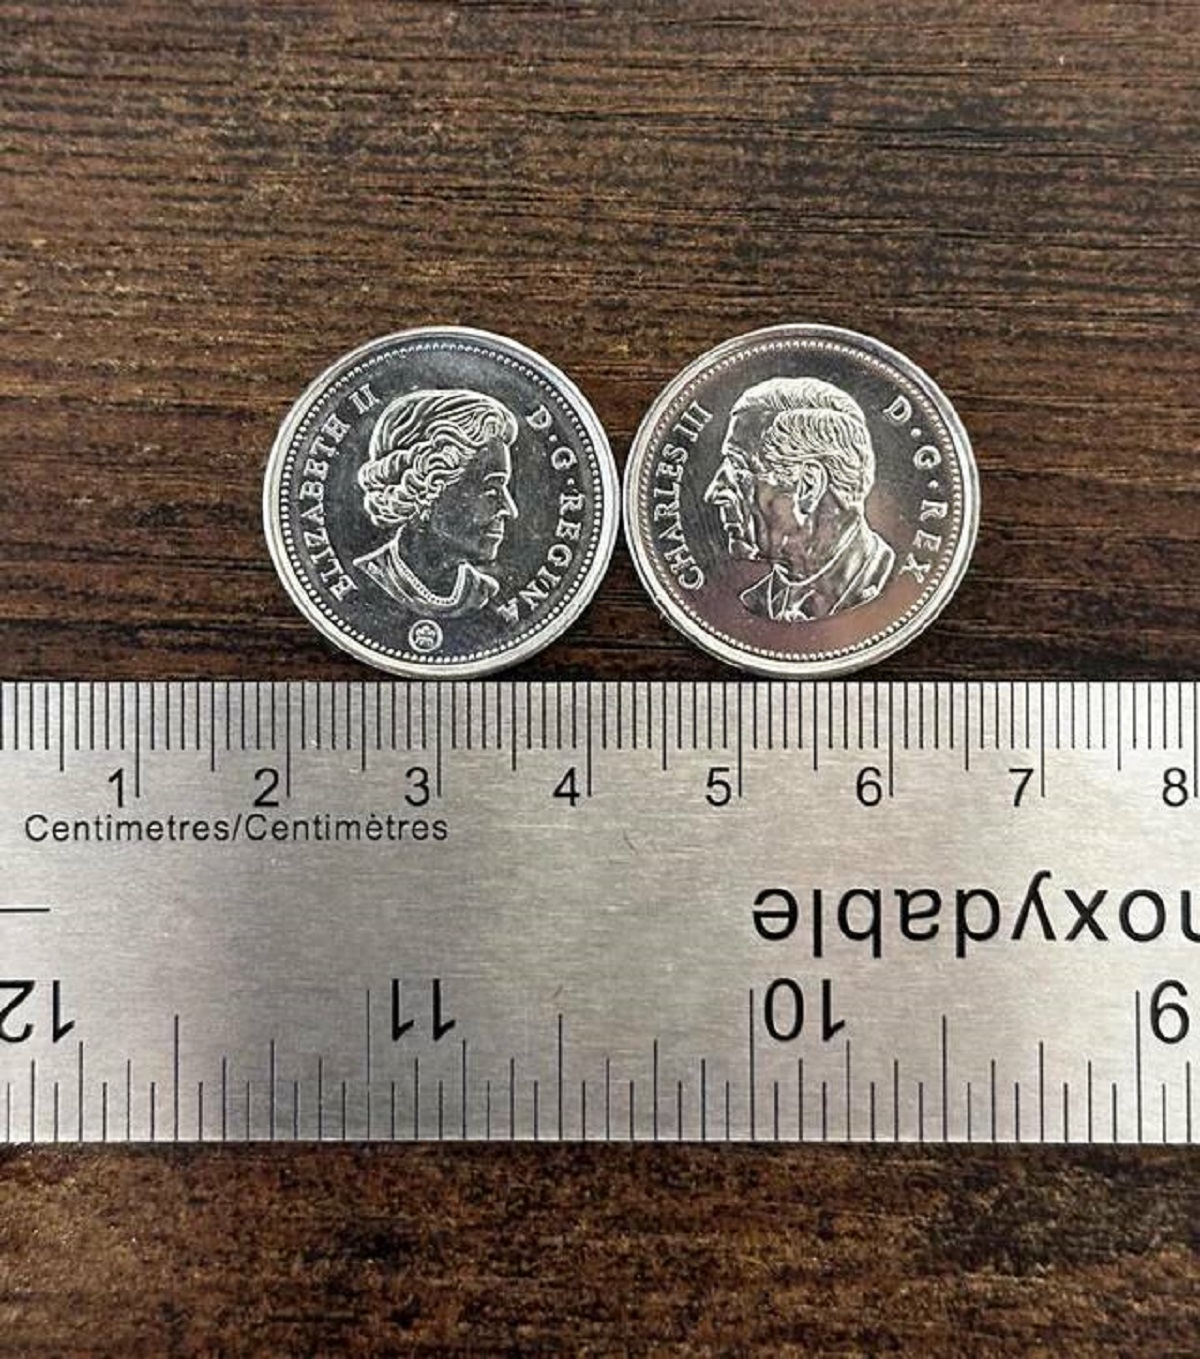 silver - Thizabet 12 Thu 2 CentimetresCentimtres 1935 PoRegina 3 11 Charles Iii P.G.Rex 10 19 7 8 noxydable 16